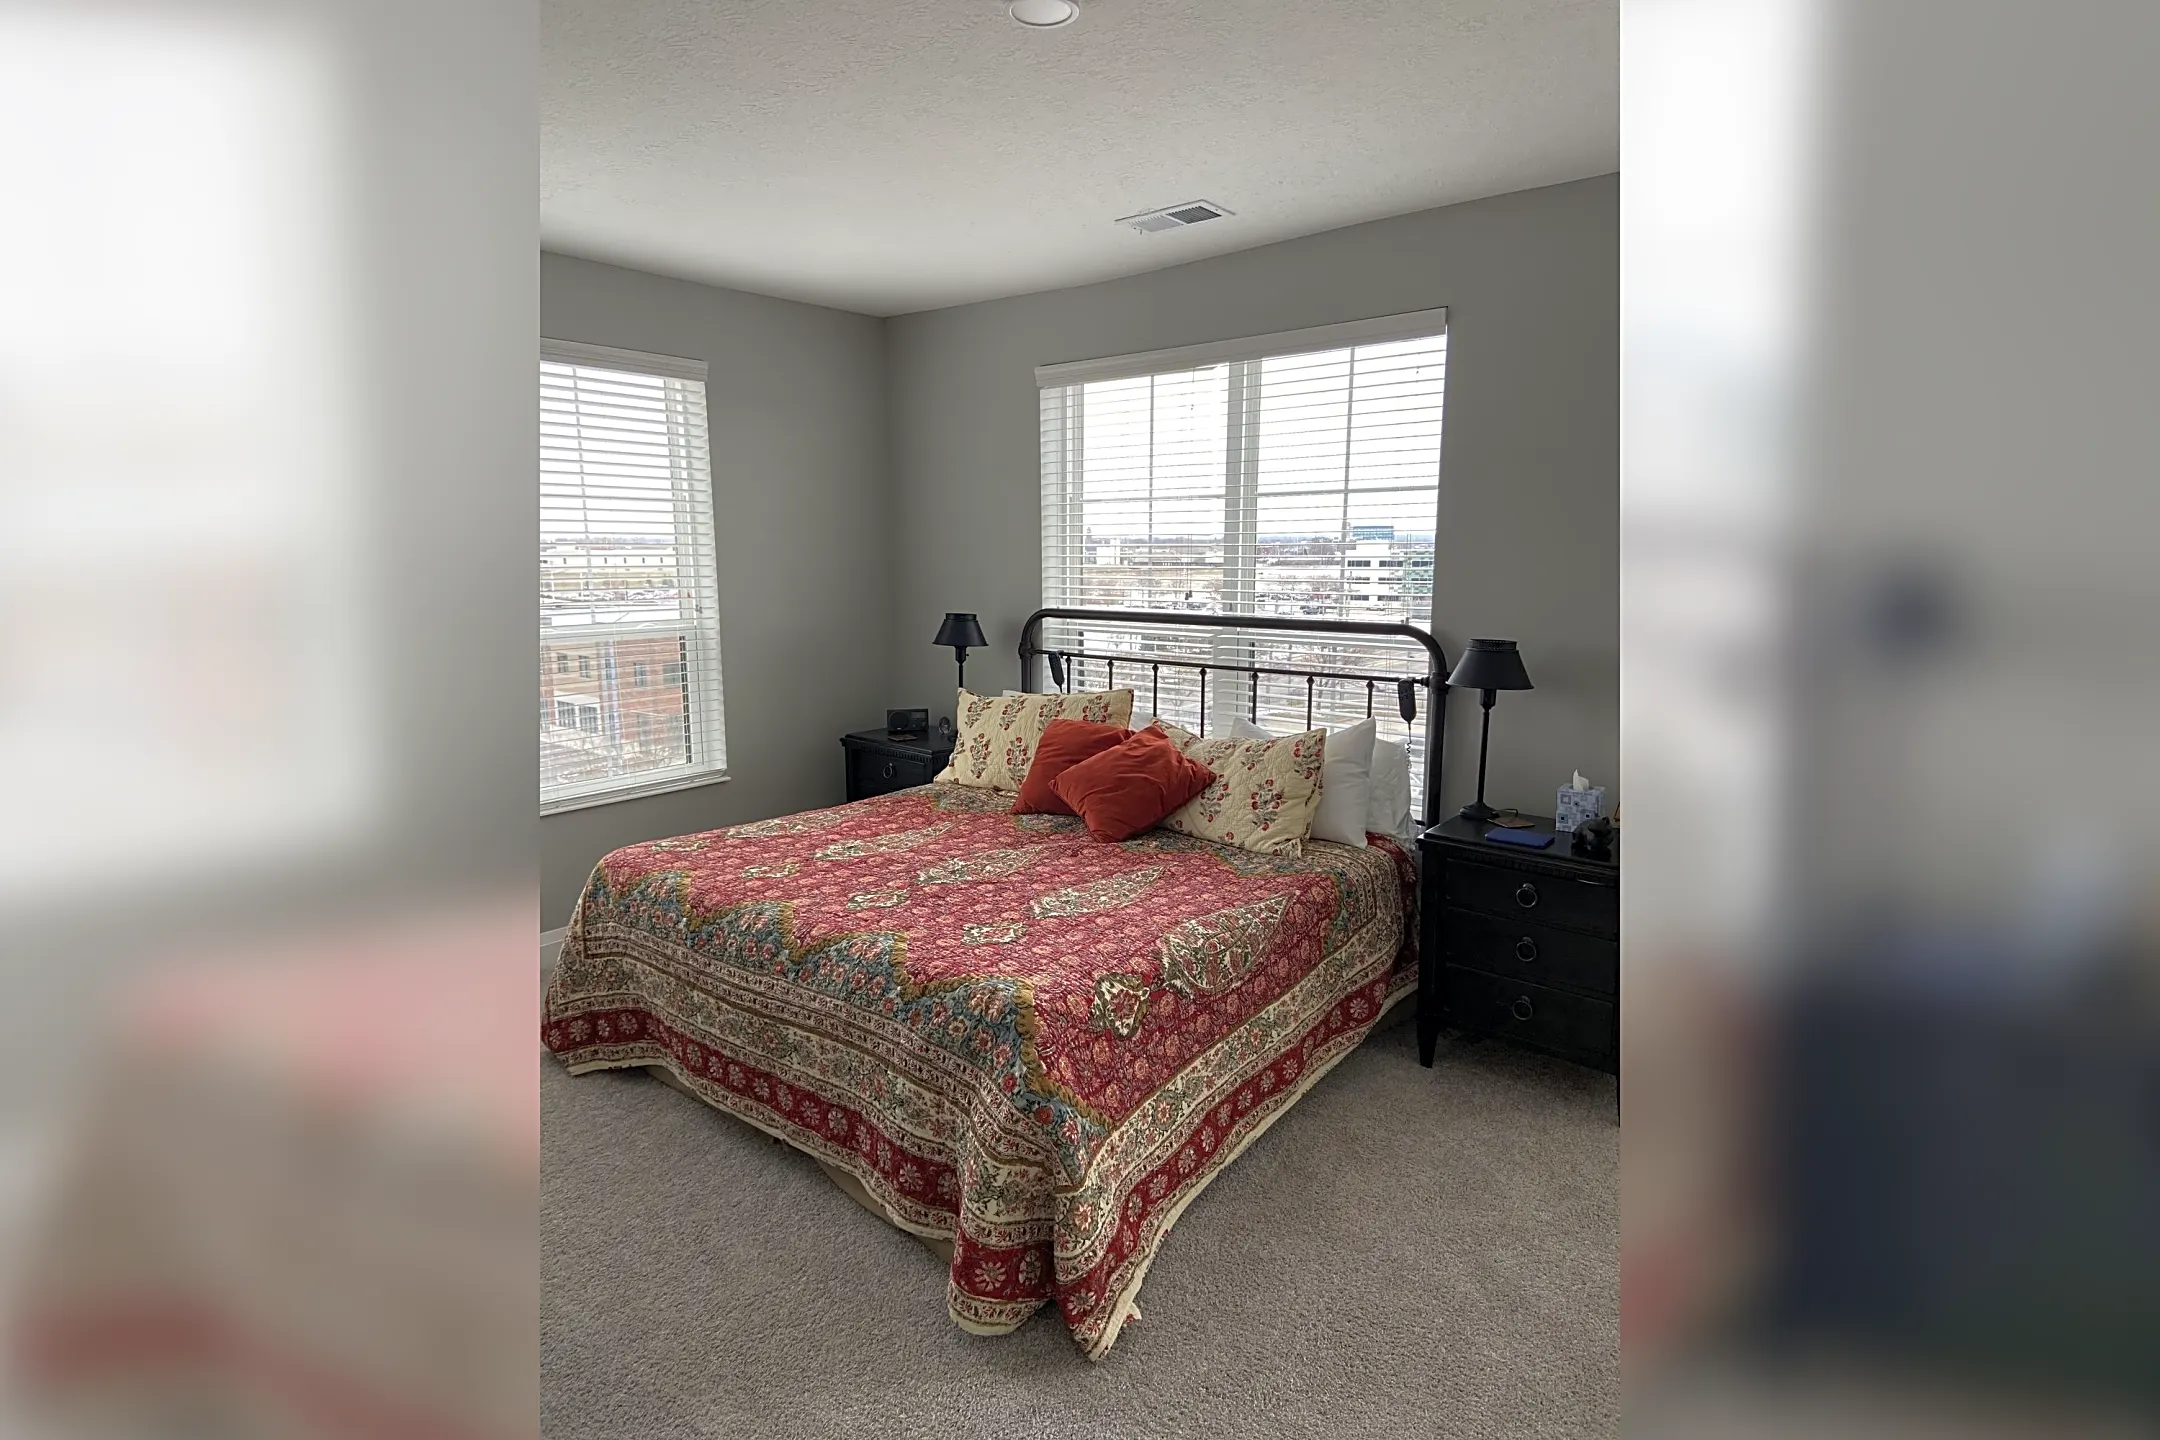 Bedroom - Centerfield Flats - Dayton, OH